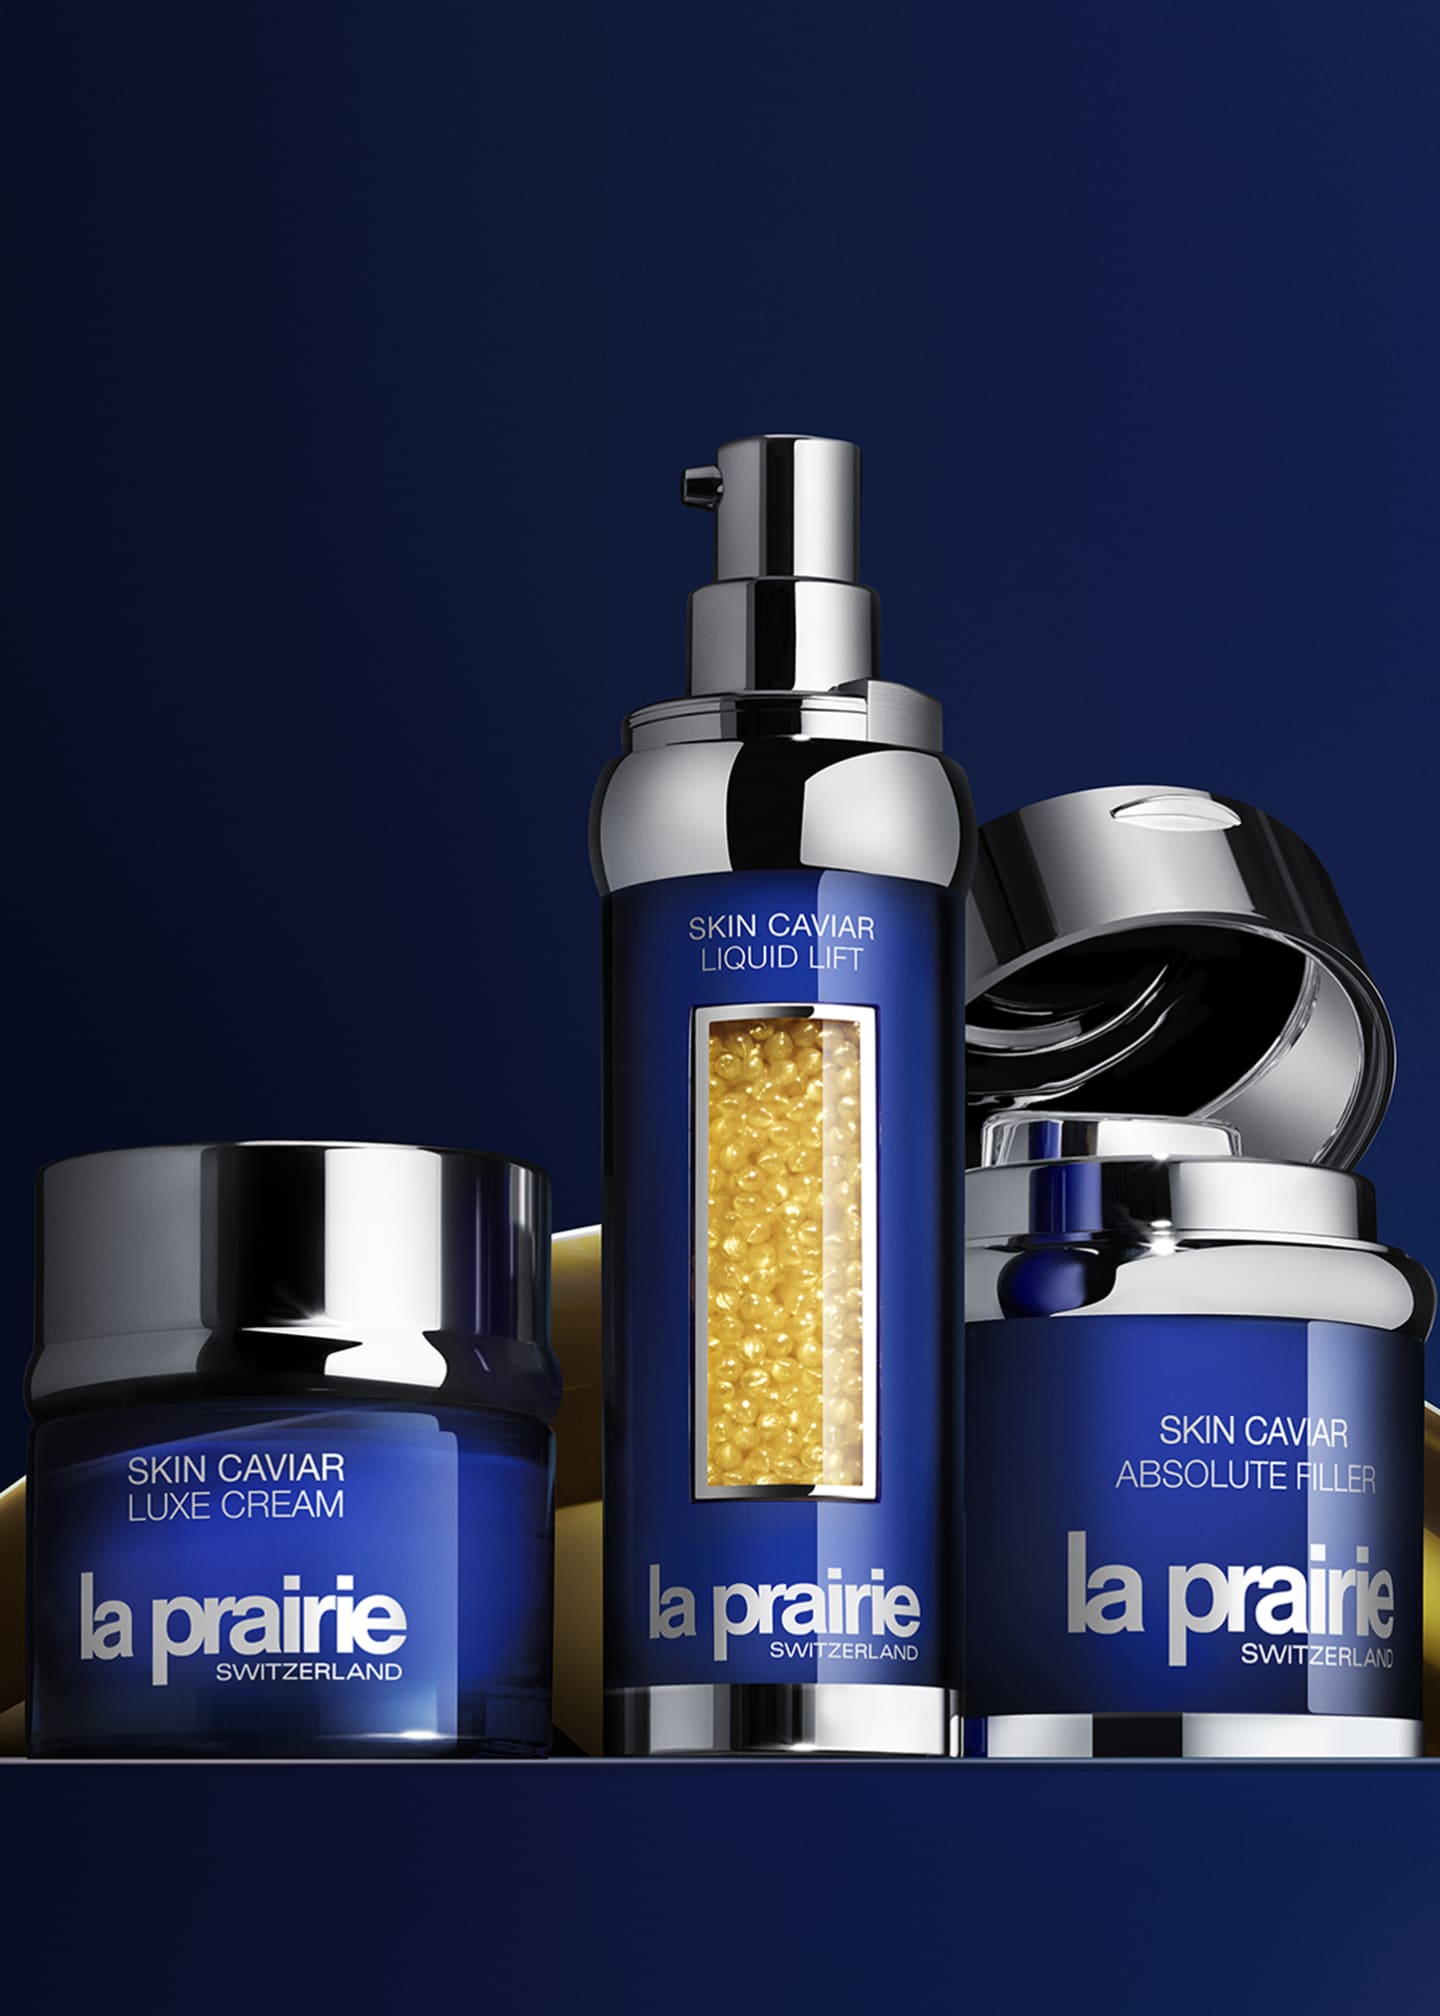 La Prairie 1.7 oz. Skin Caviar Liquid Lift Face Serum Image 5 of 5